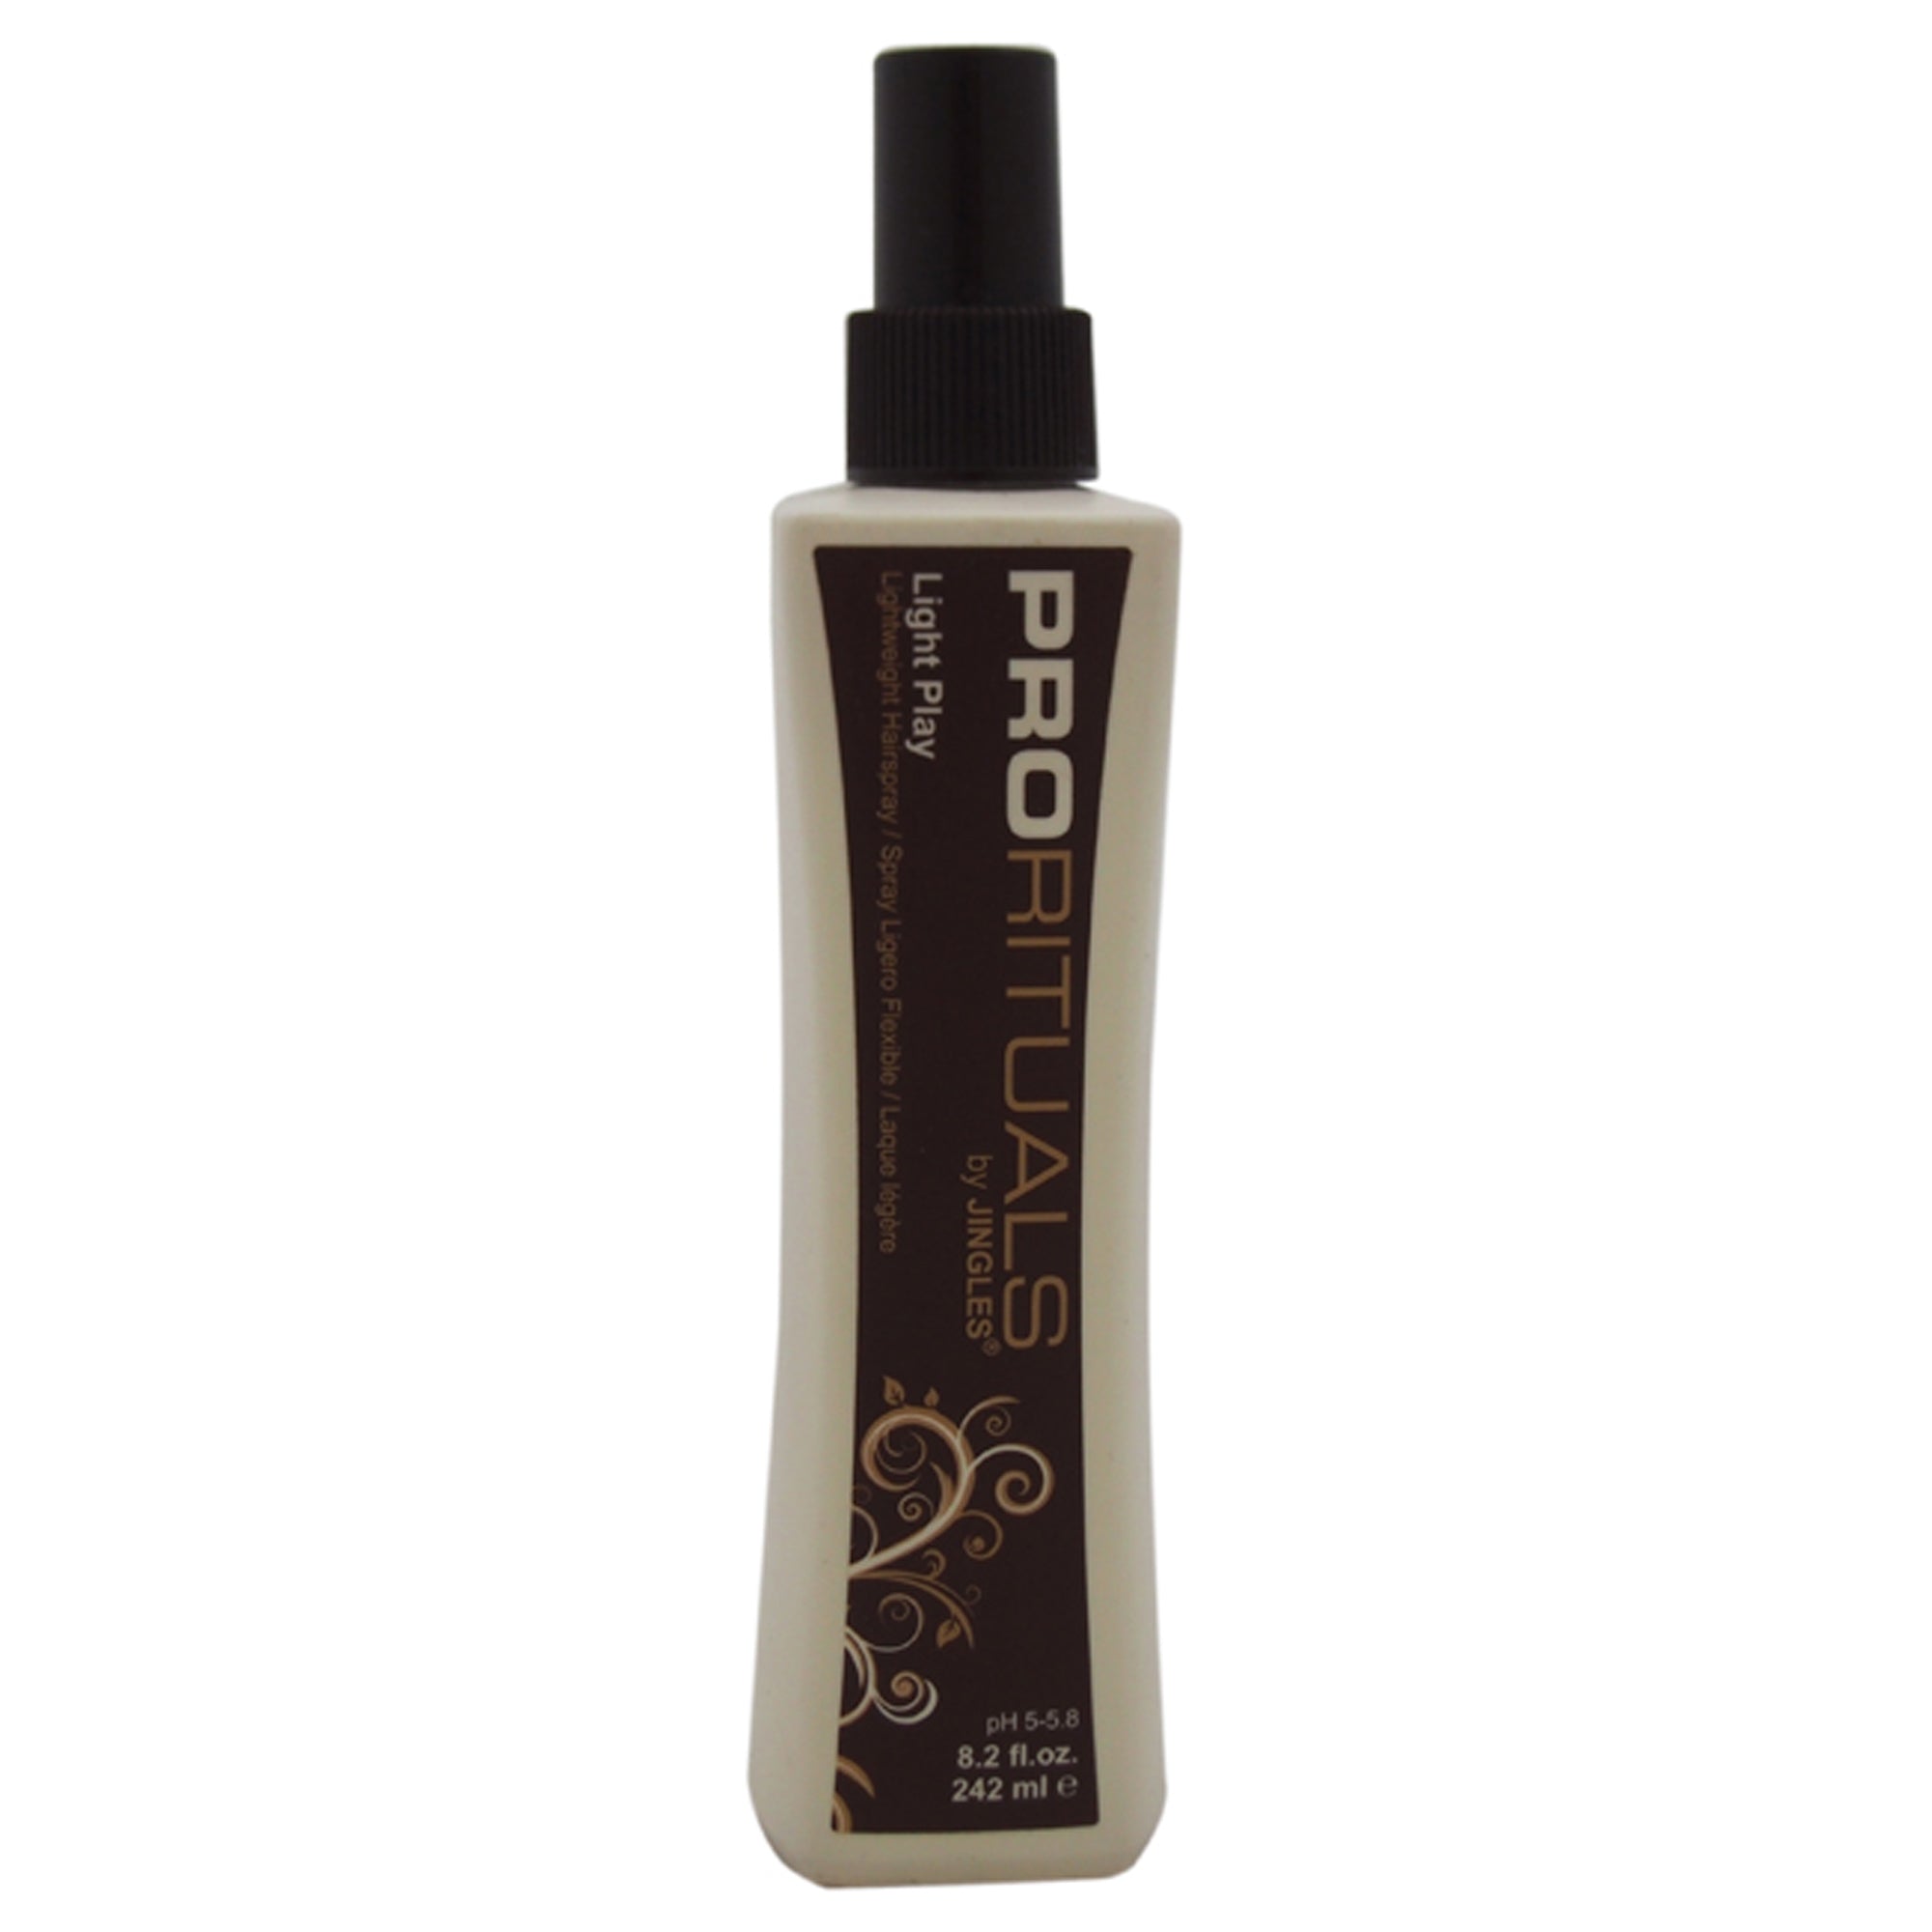 ProRituals Light Play Lightweight Hair Spray by Jingles for Unisex 8.2 oz Spray